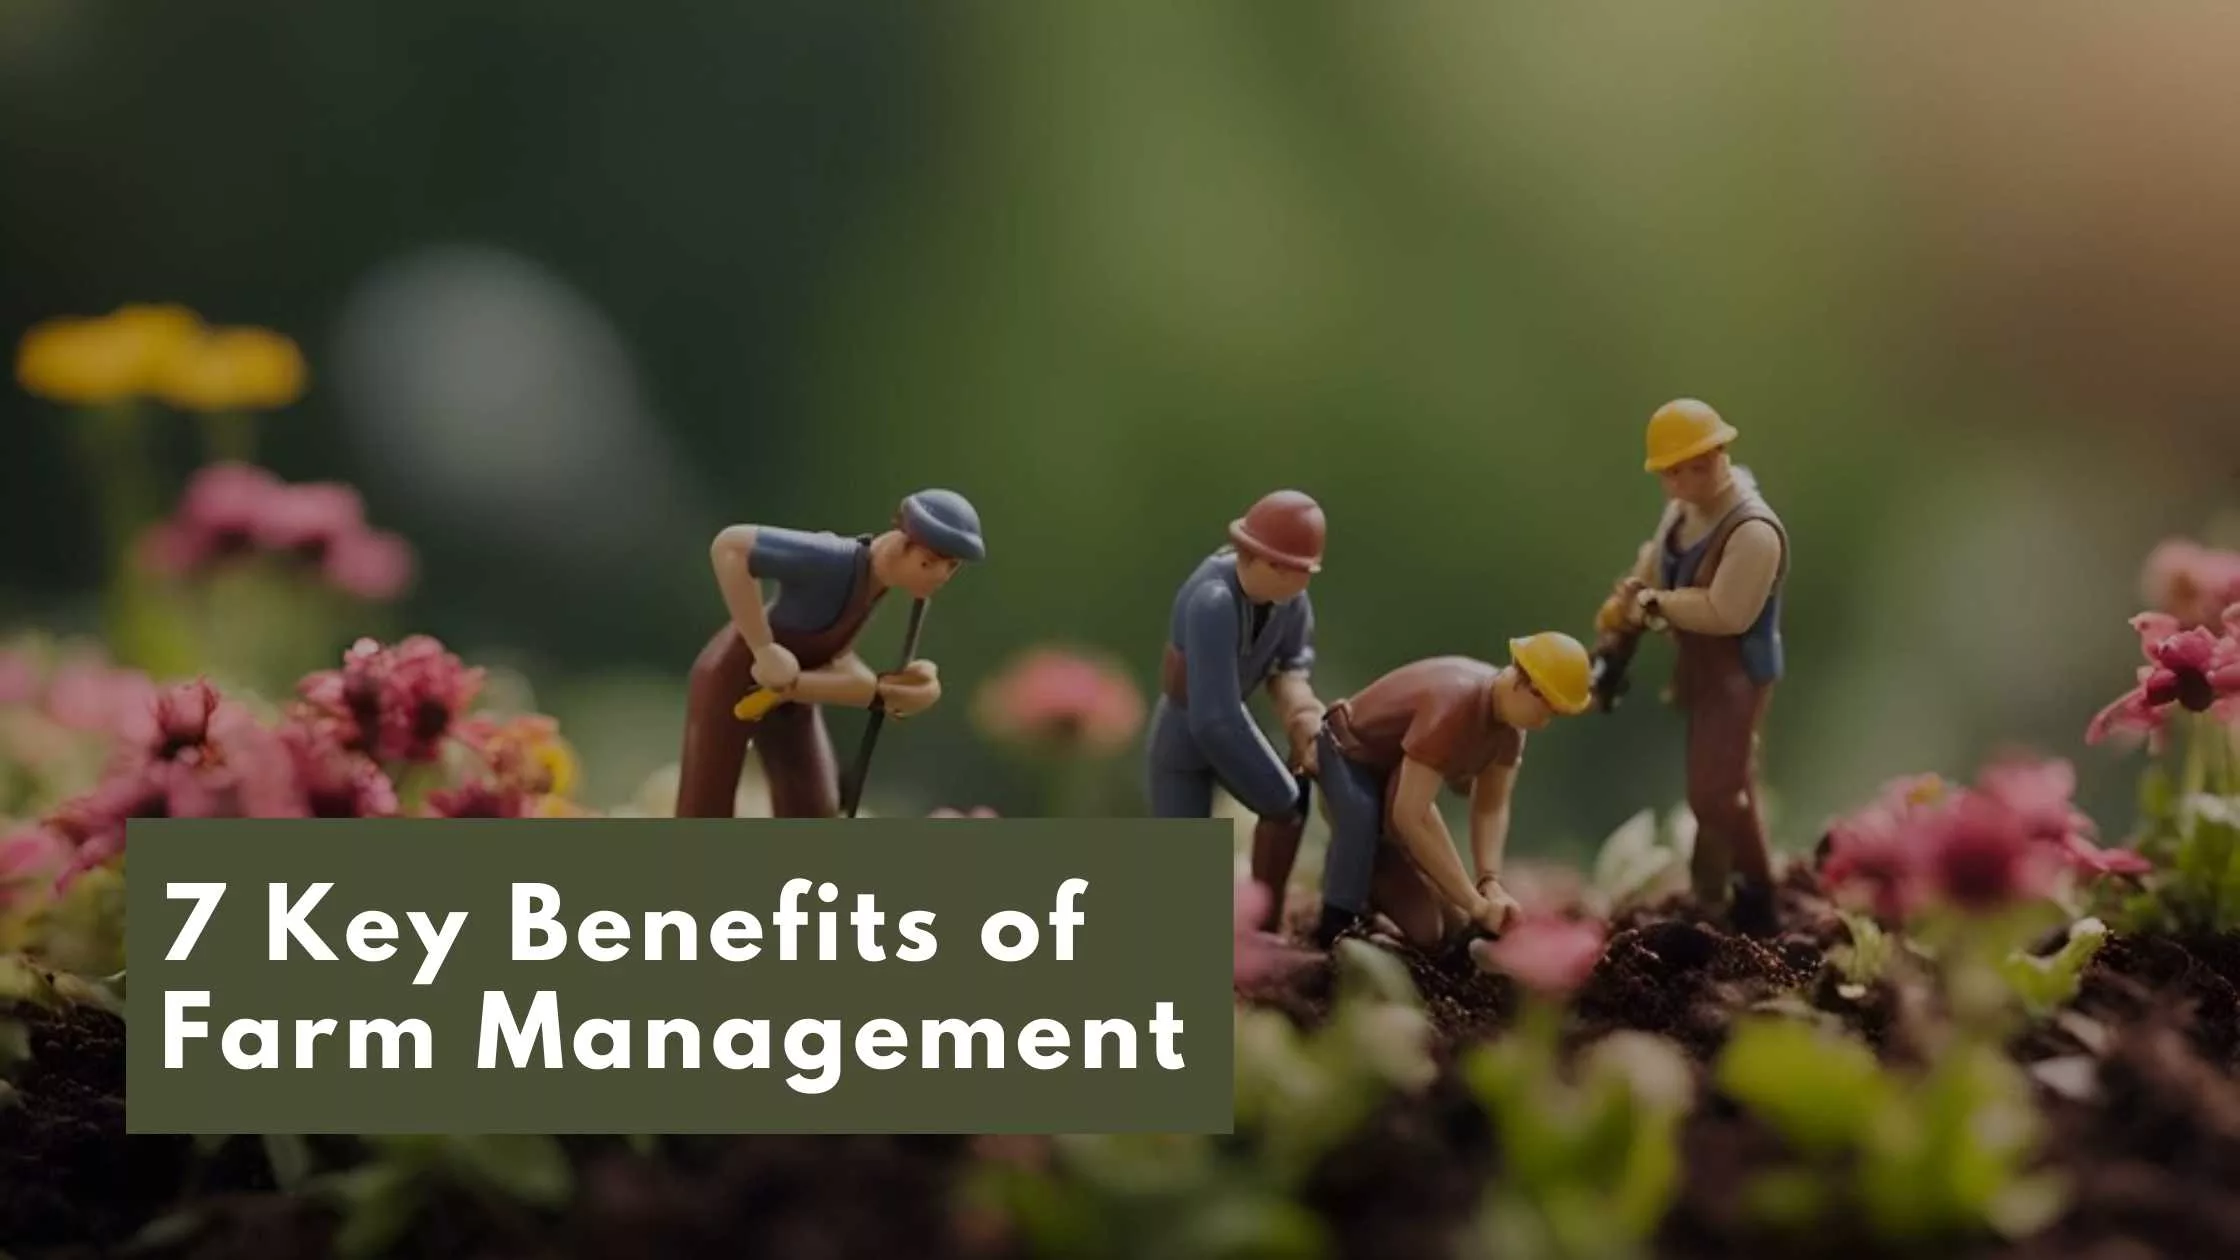 Key Benefits of Farm Management